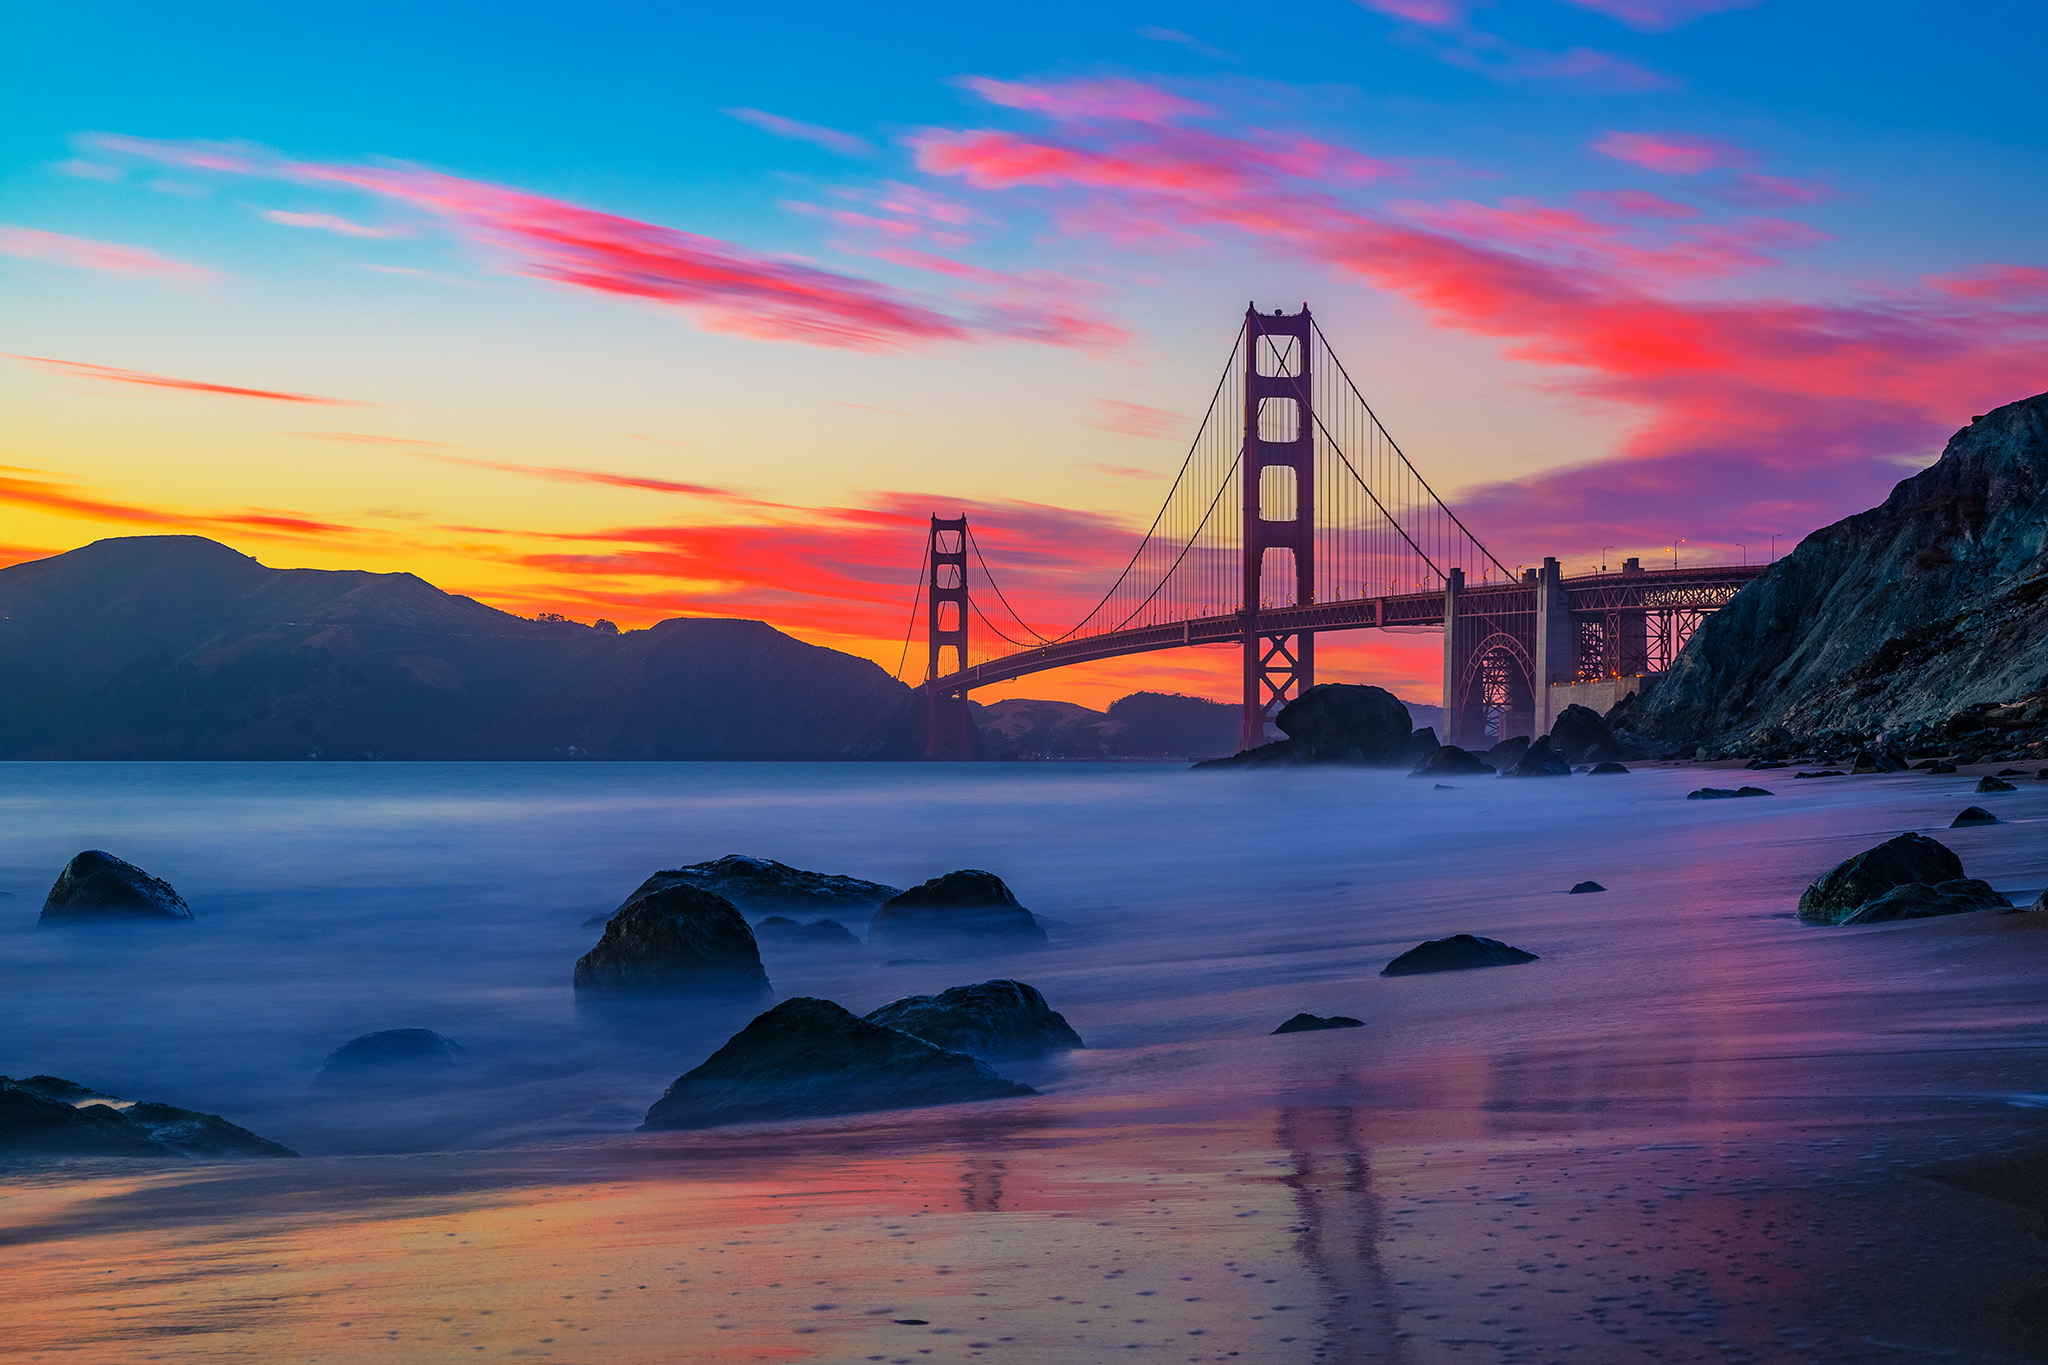 Sunset Reflection at Golden Gate Bridge